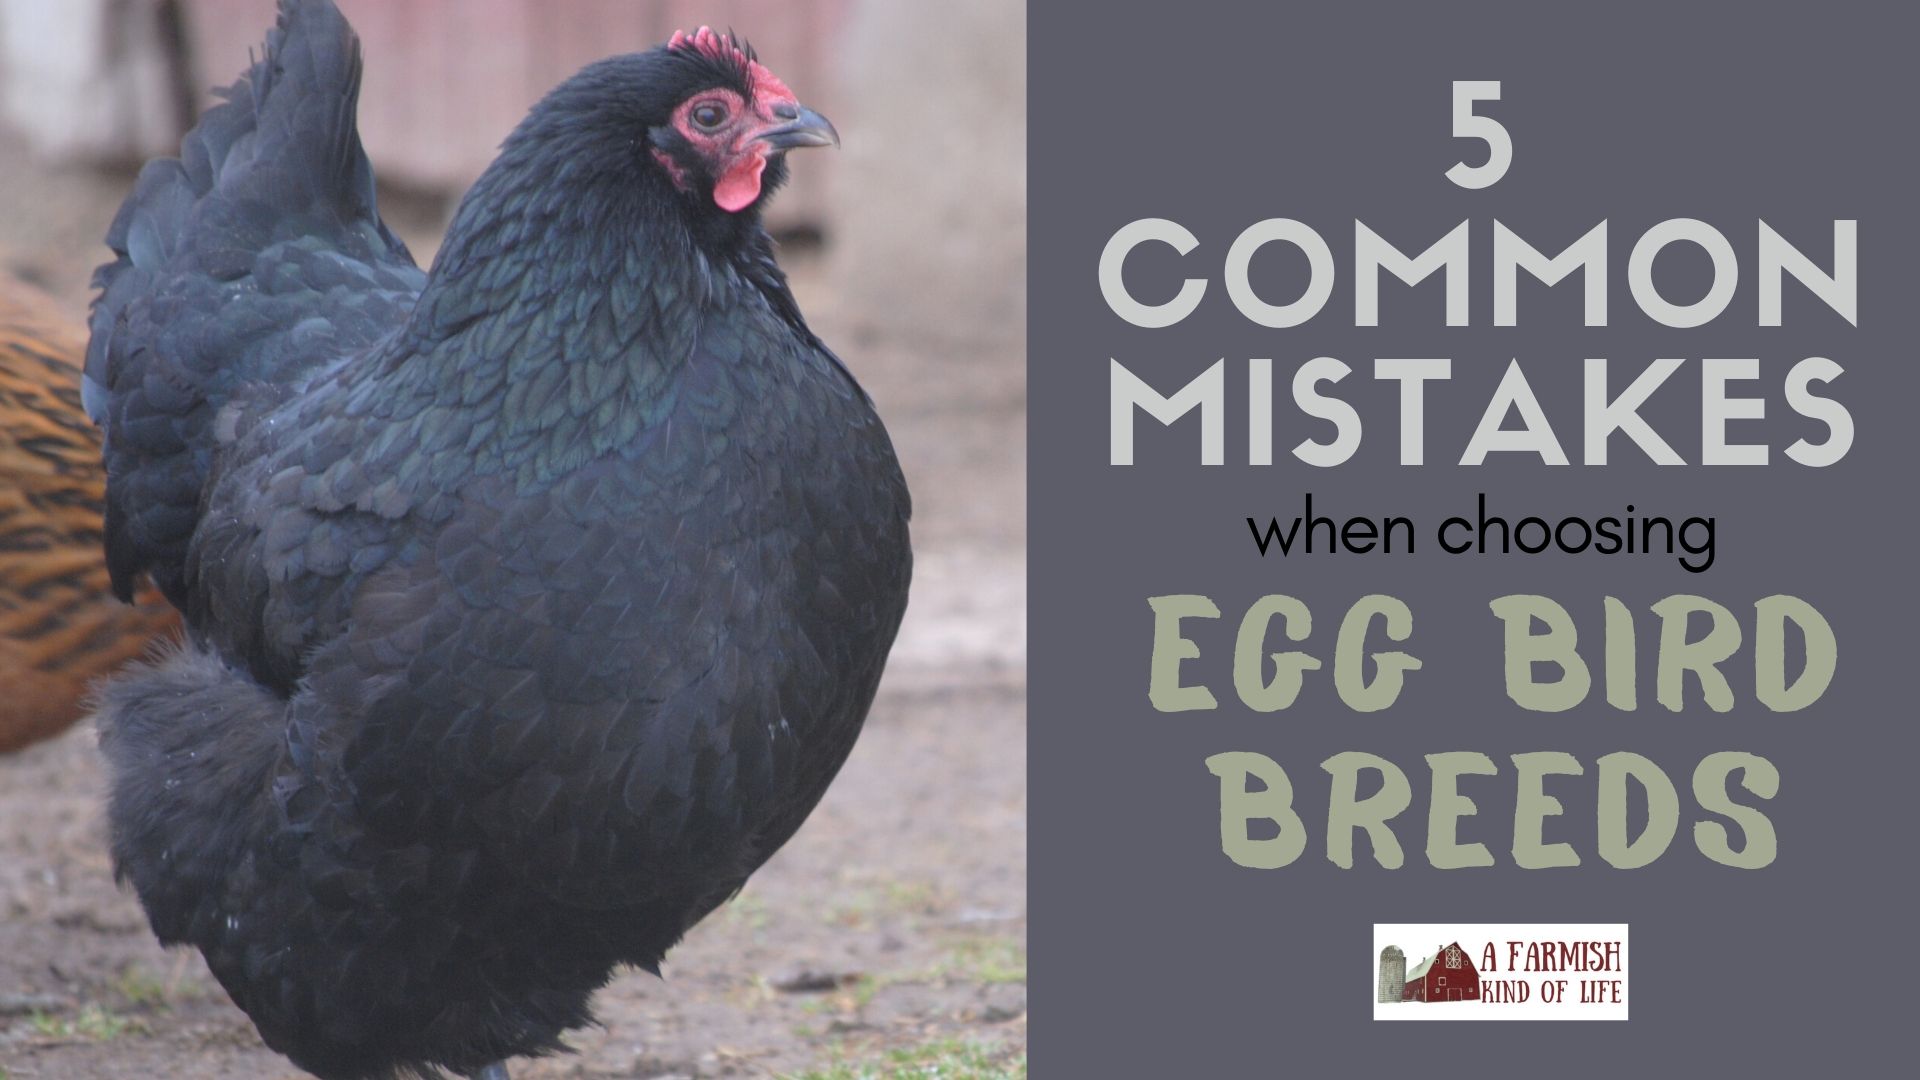 85: 5 Common Mistakes When Choosing Egg Bird Breeds